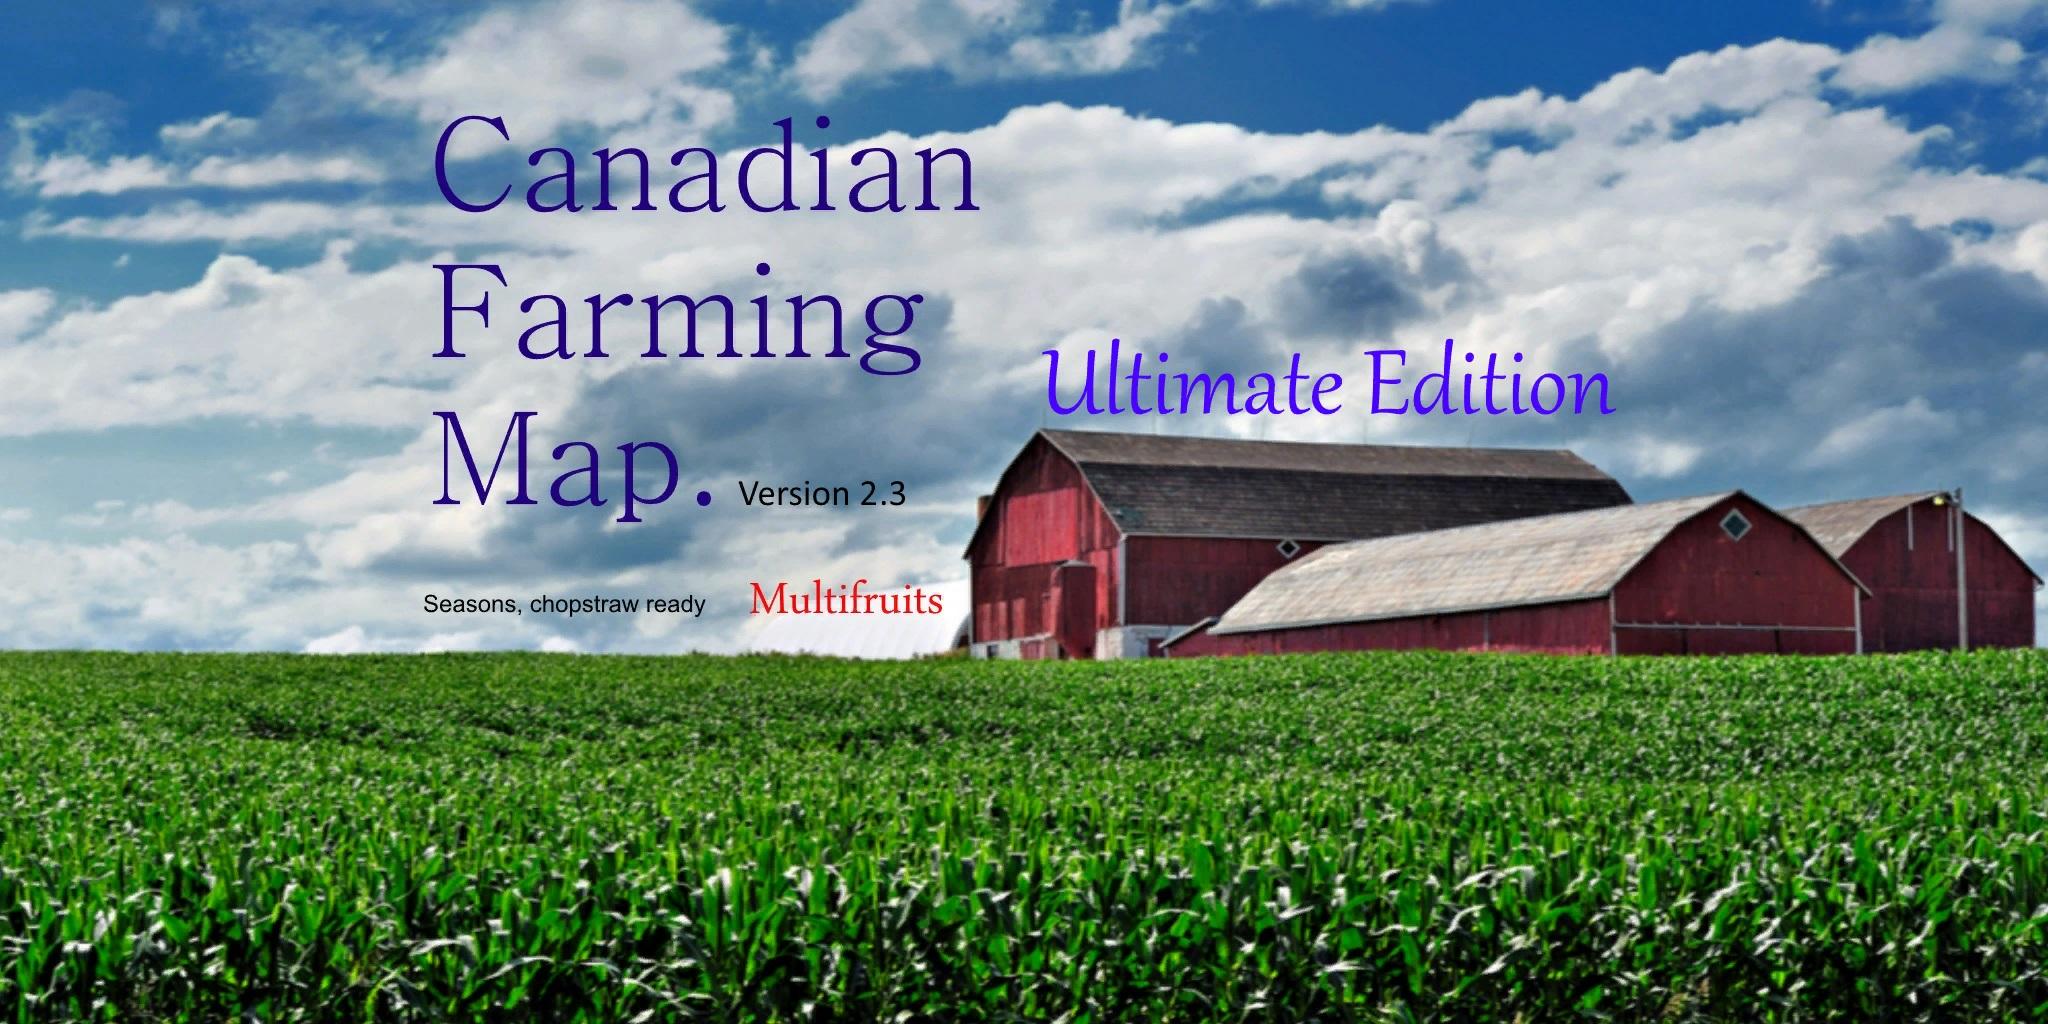 FS17 - Canadian Farming Map Ultimate Edition V2.3